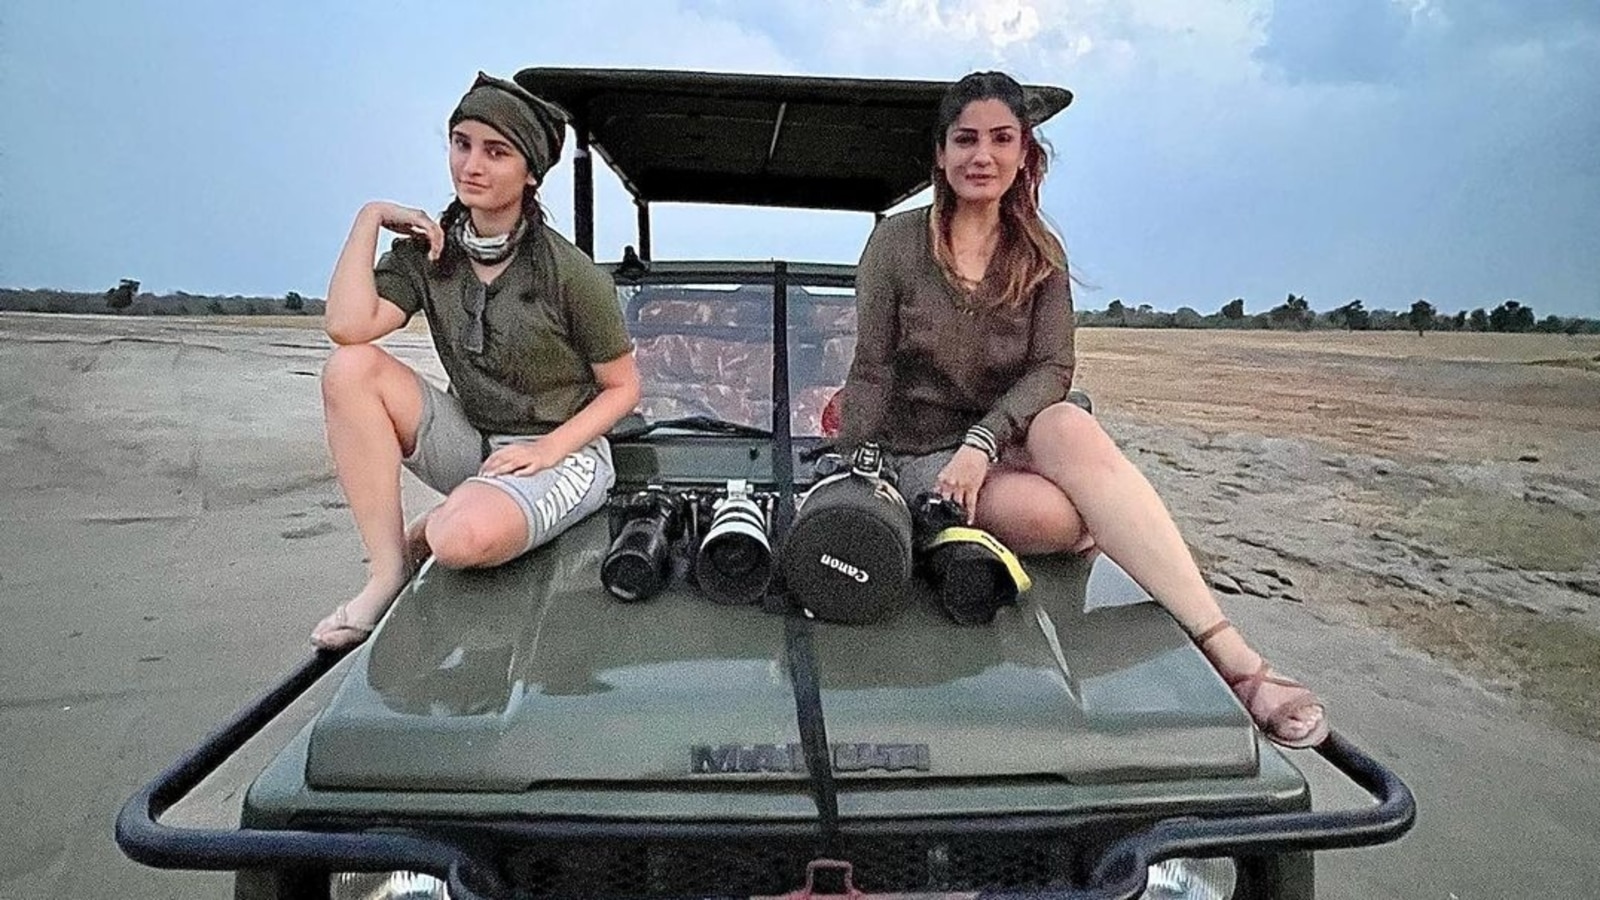 Raveena Tandon shares pics with daughter Rasha Thadani from wildlife safari  trip | Bollywood - Hindustan Times